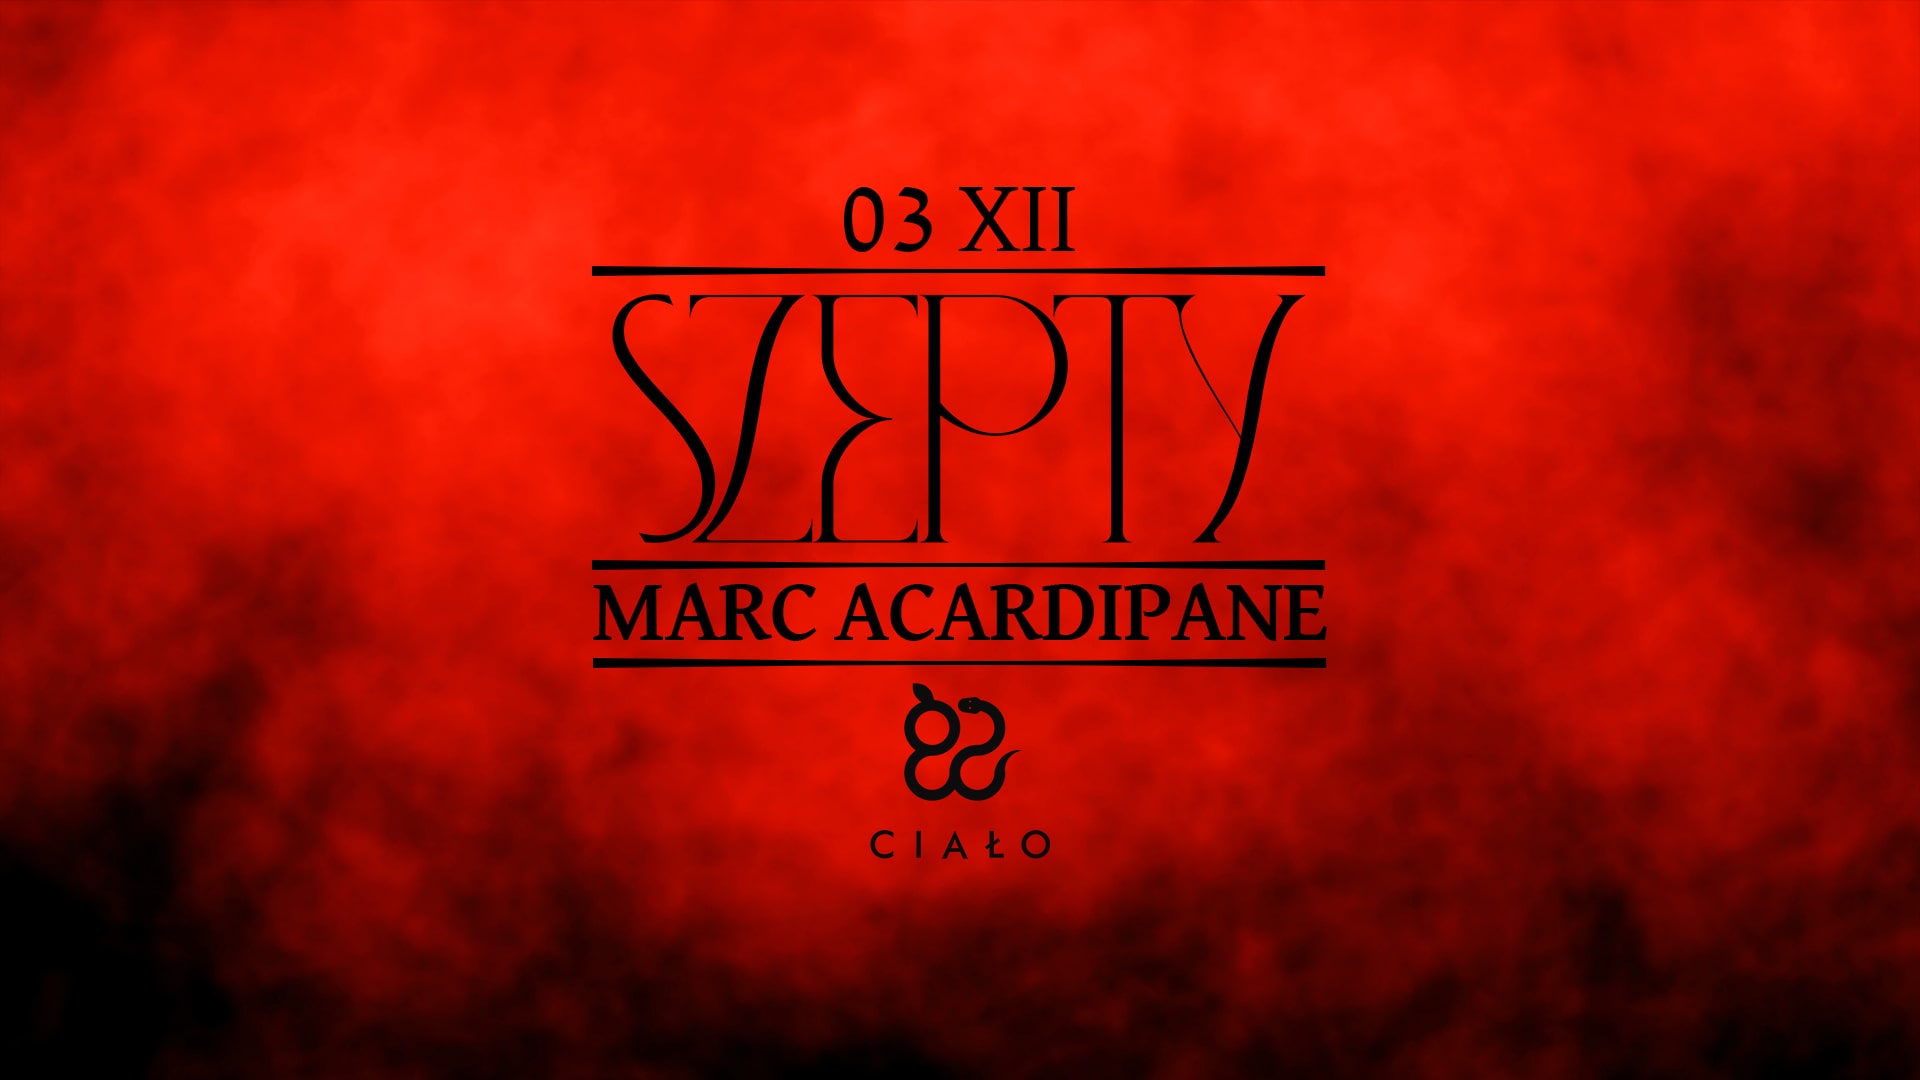 Szepty: Marc Acardipane